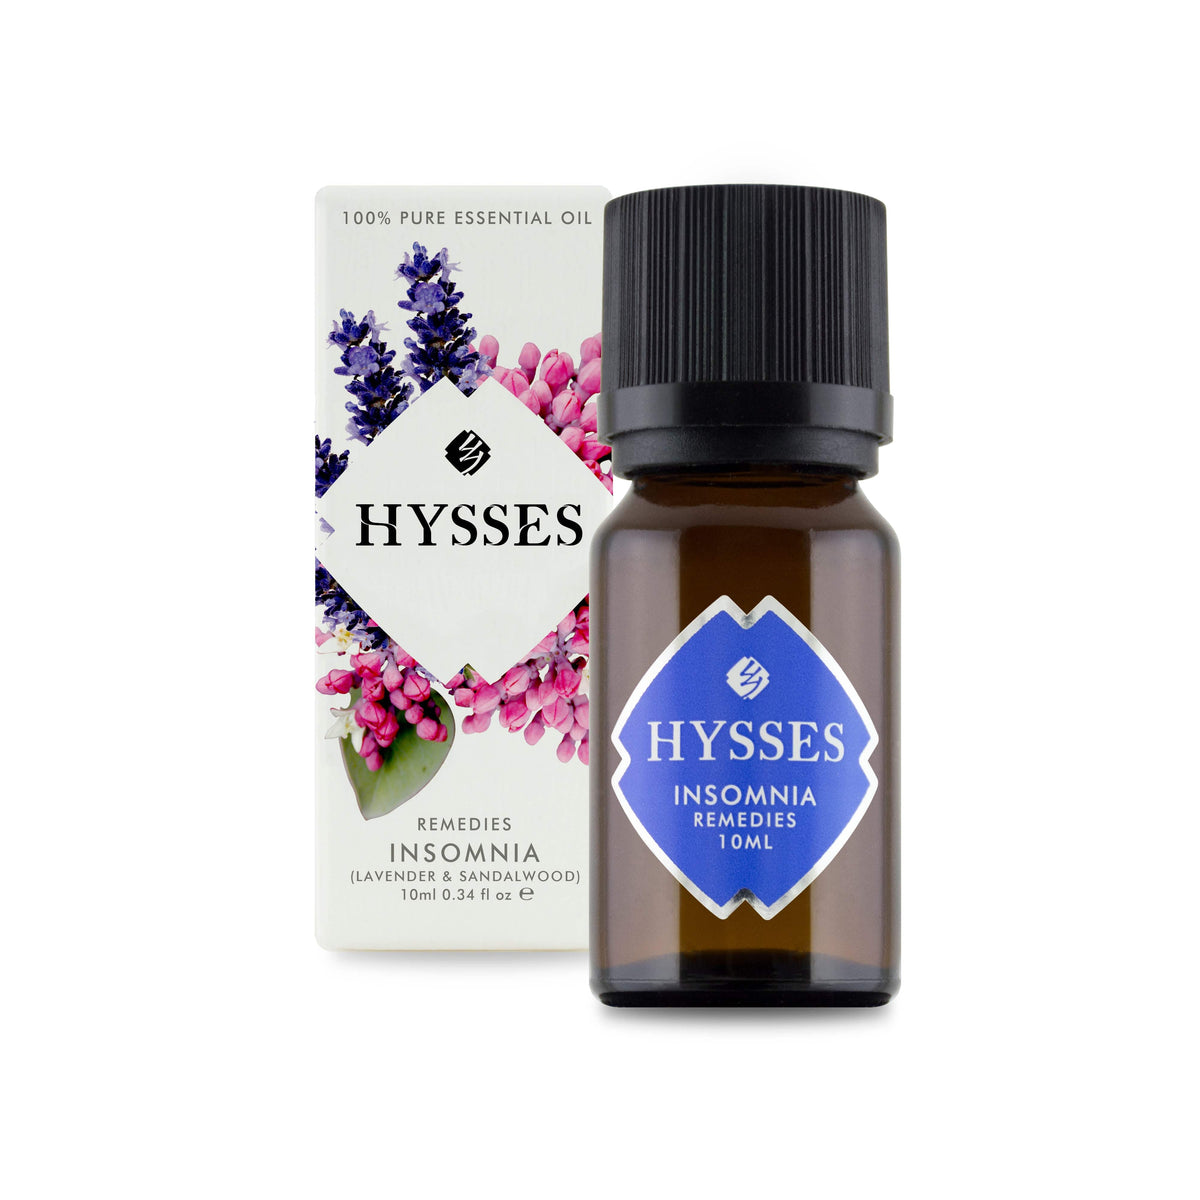 Hysses Essential Oil 10ml Remedies, Insomnia (Lavender &amp; Sandalwood)